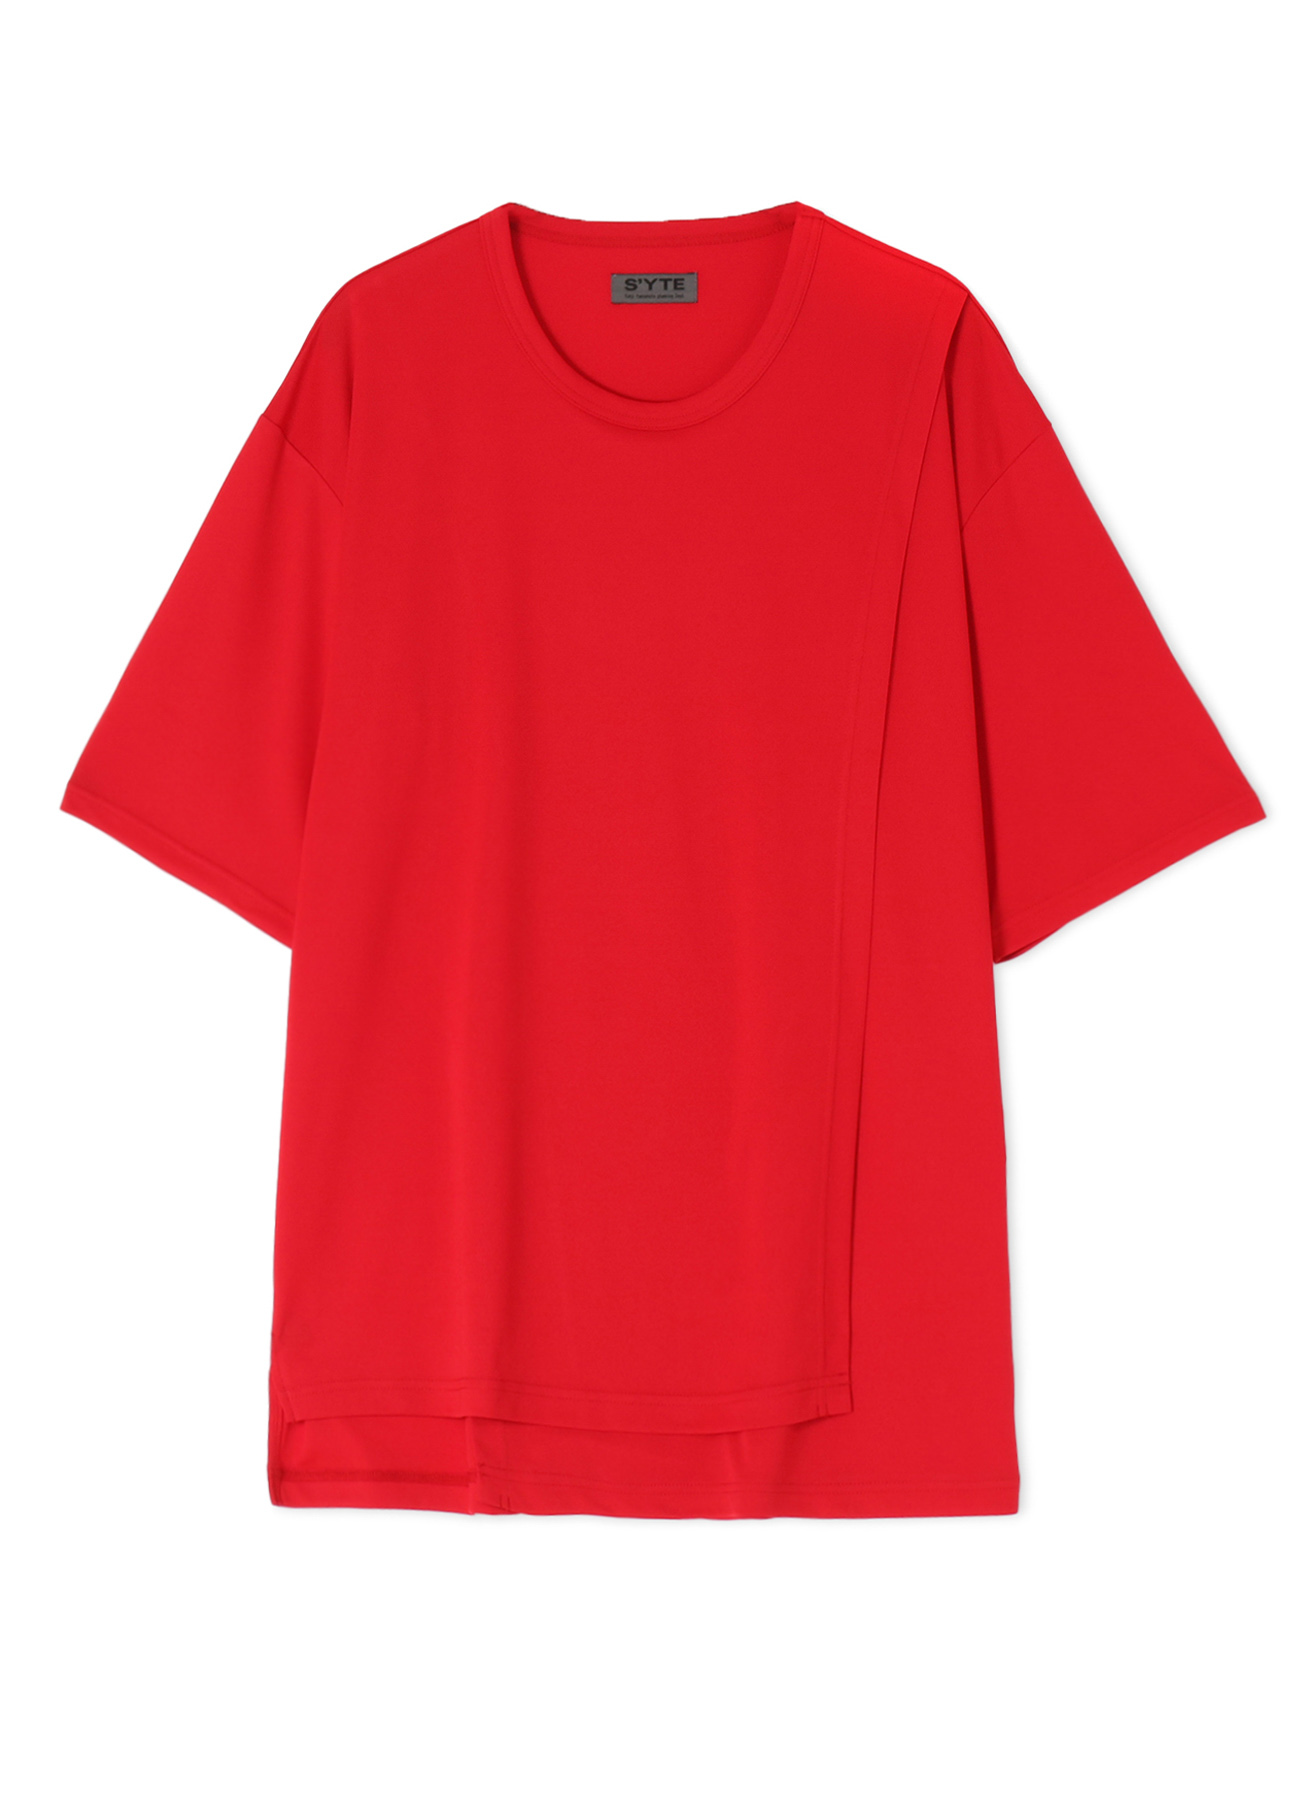 Thin Smooth Jersey Crew Neck Half-Layered  Short Sleeve T-Shirt